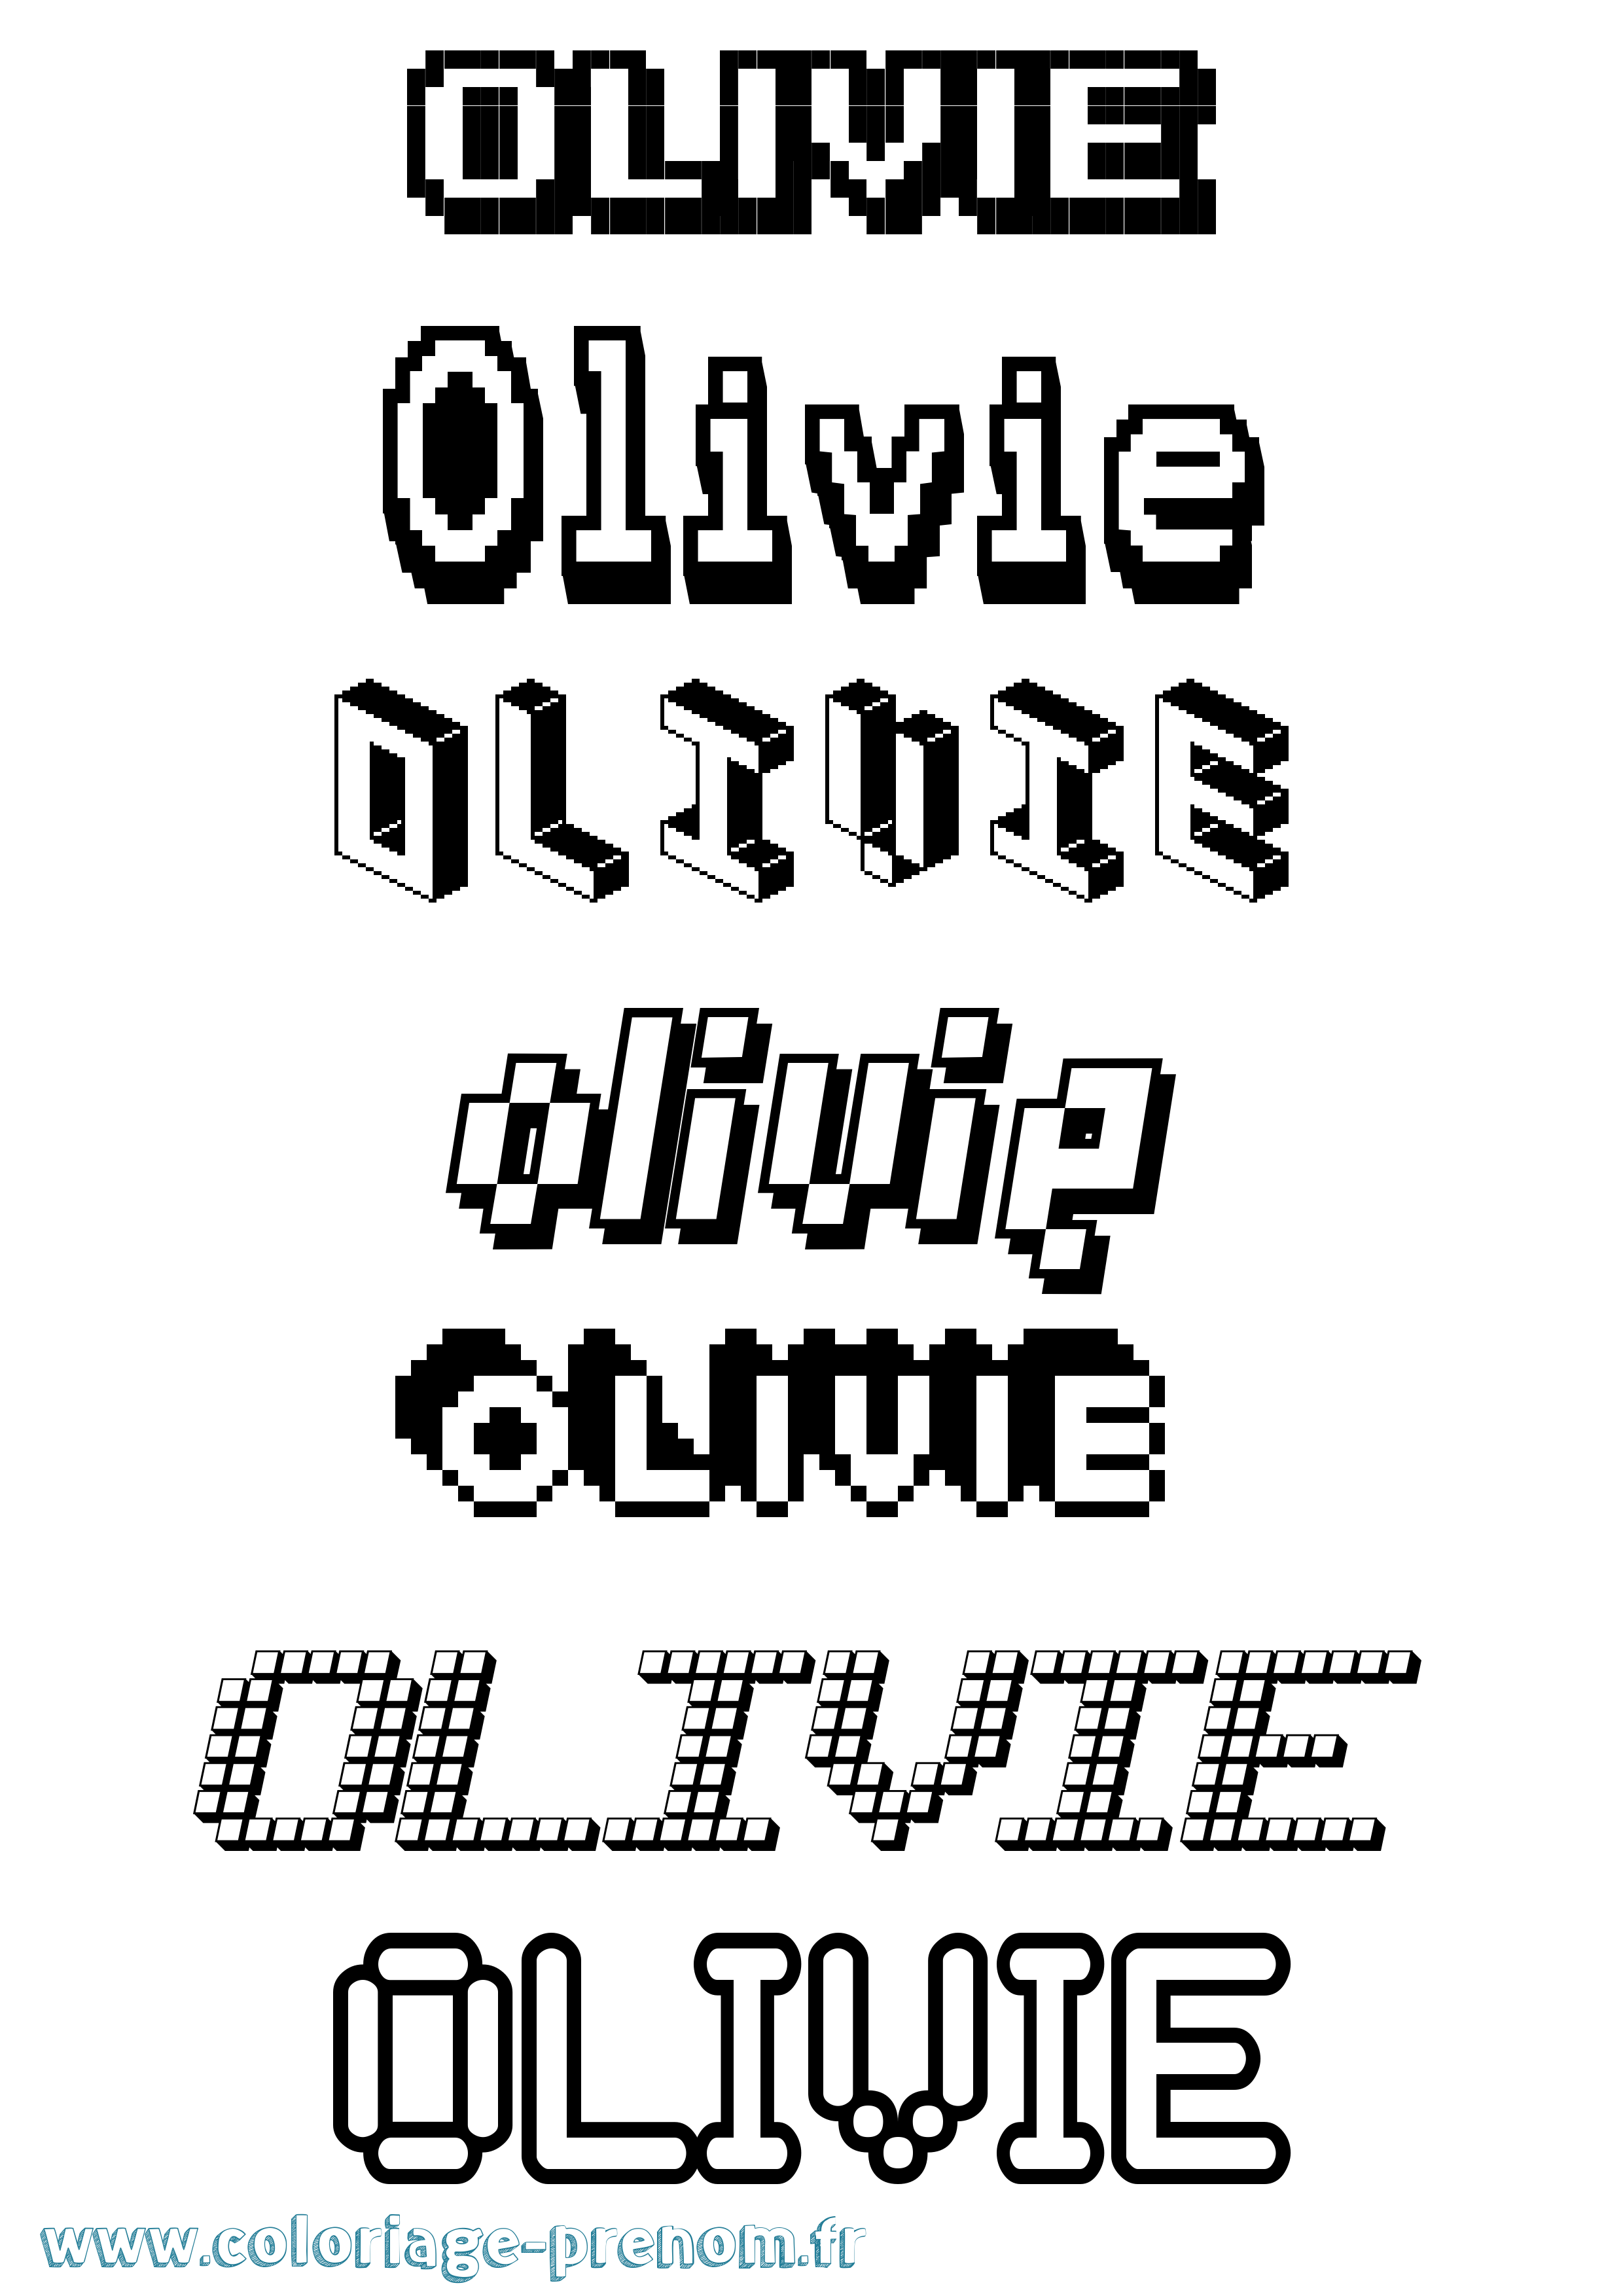 Coloriage prénom Olivie Pixel